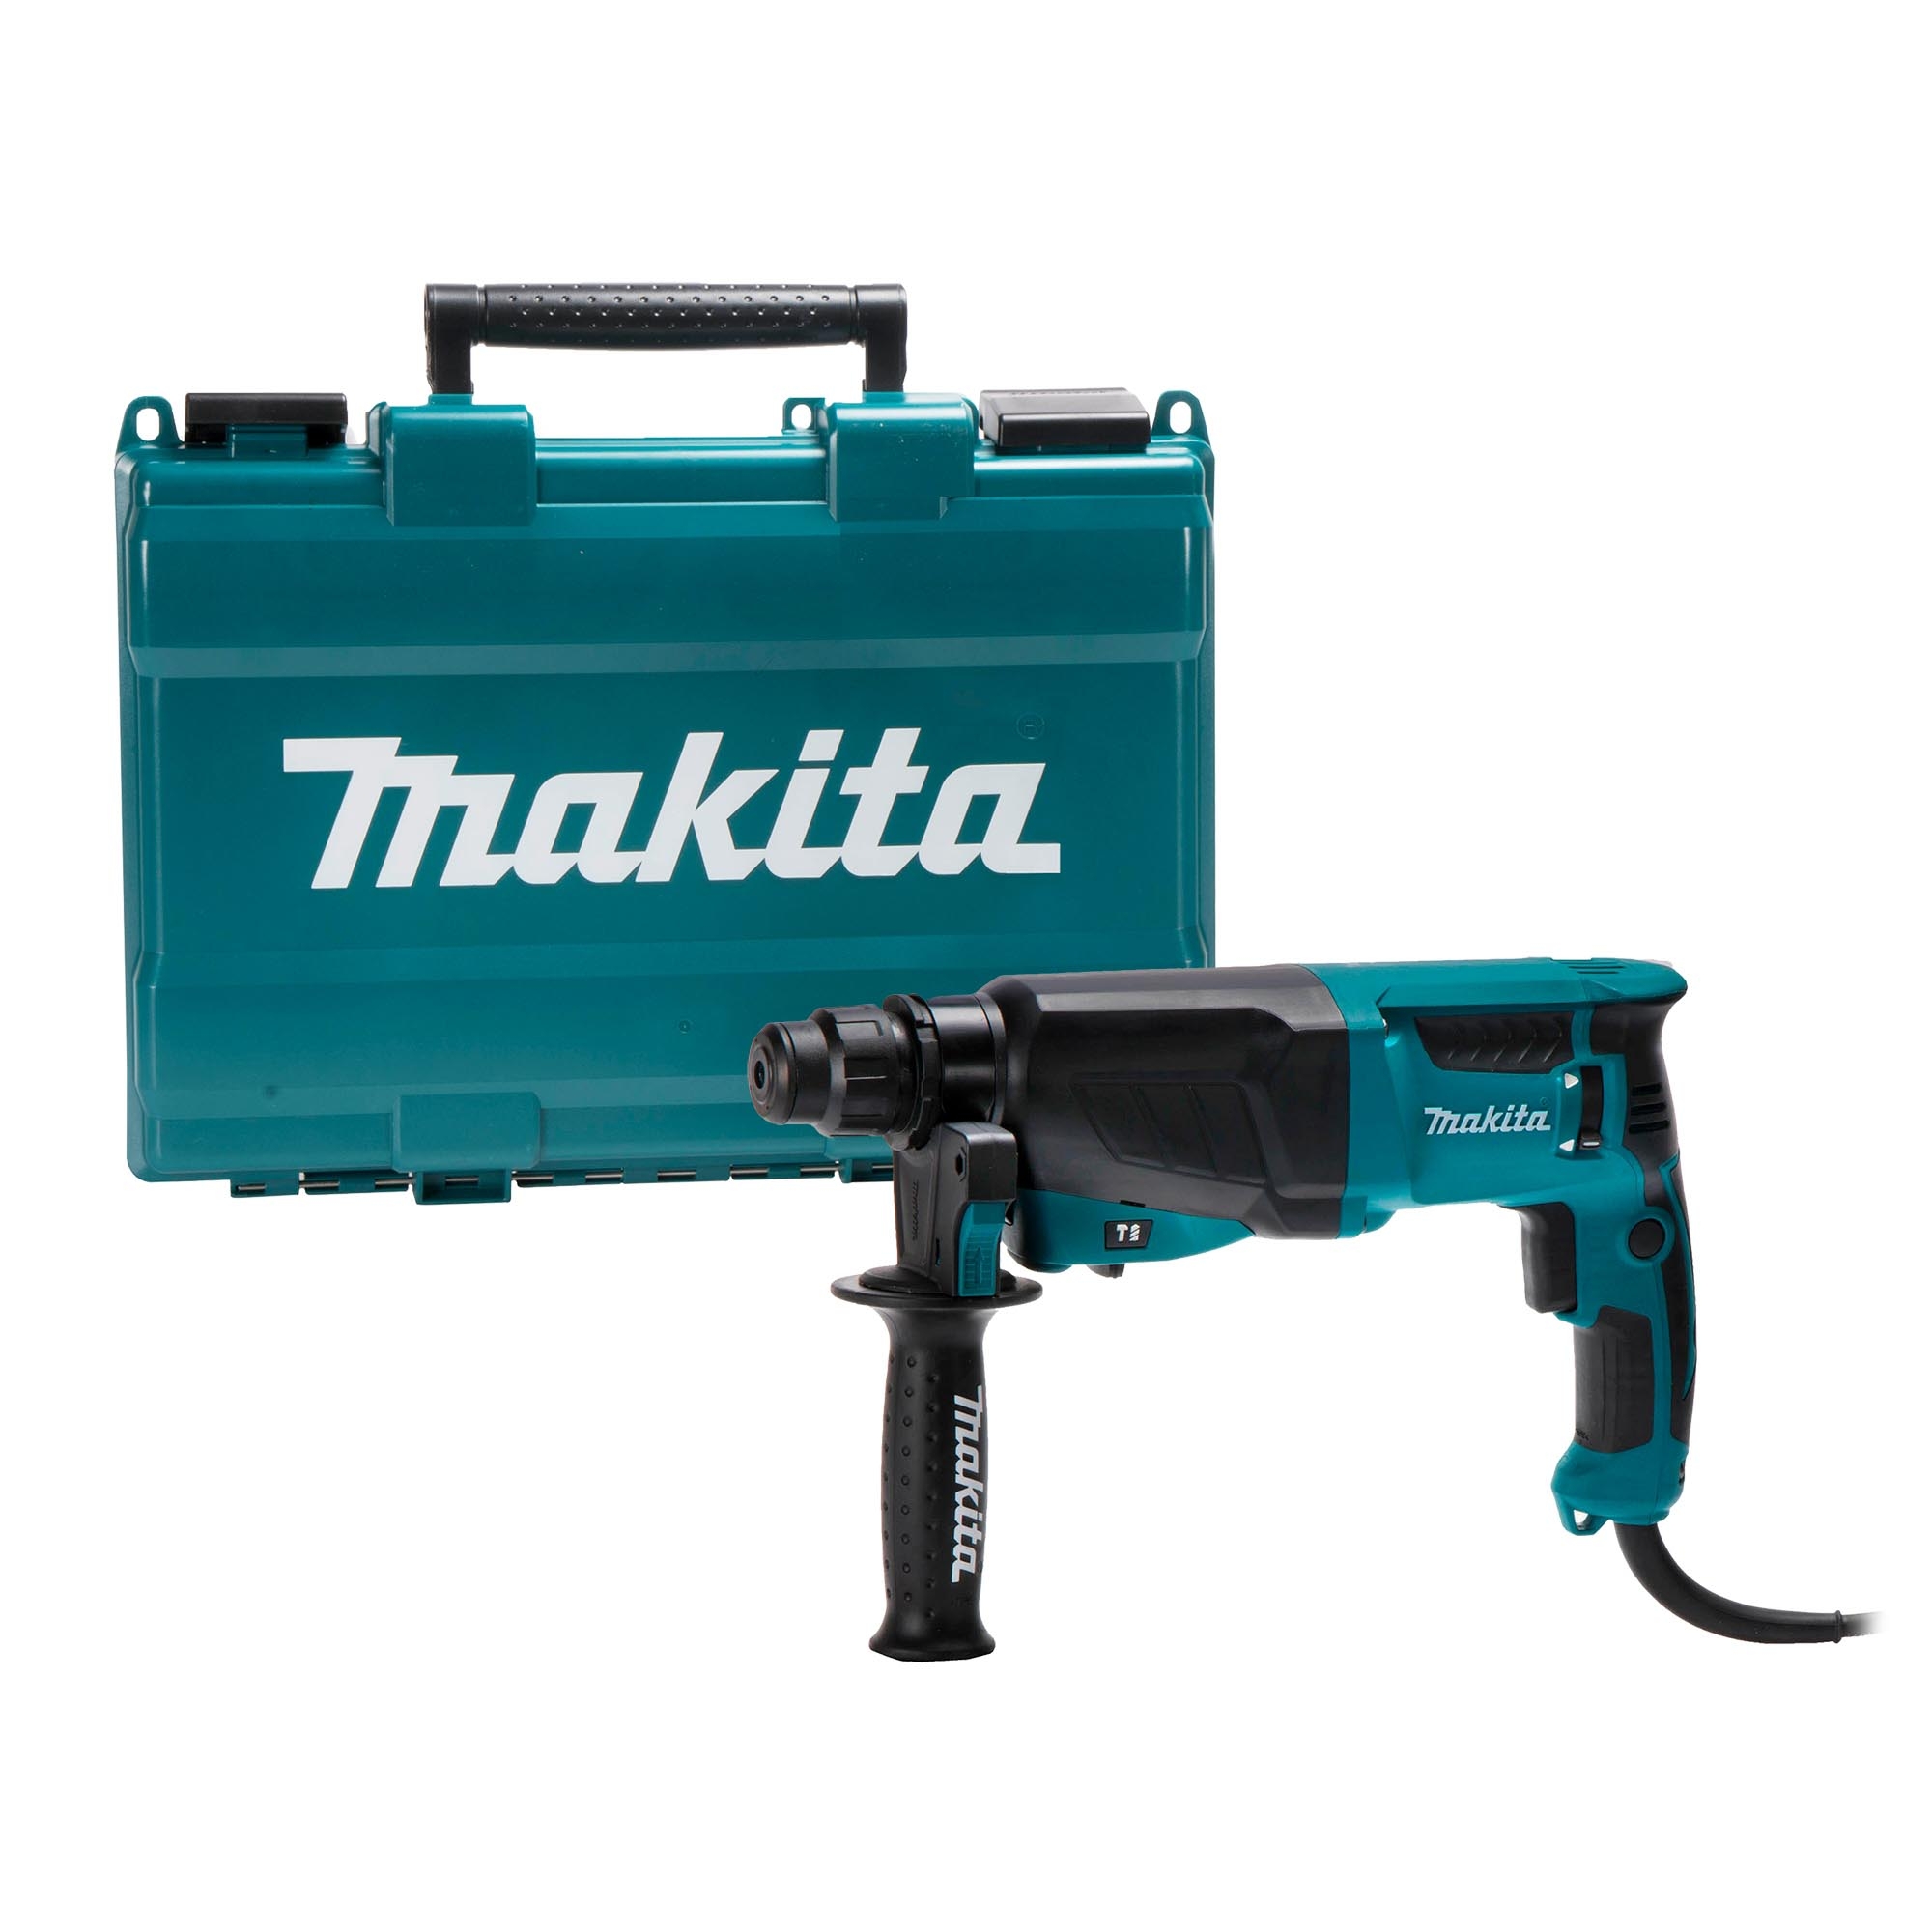 Makita Hr2630 SDS Rotary Hammer Drill 3 Mode 26mm 110v for sale online 